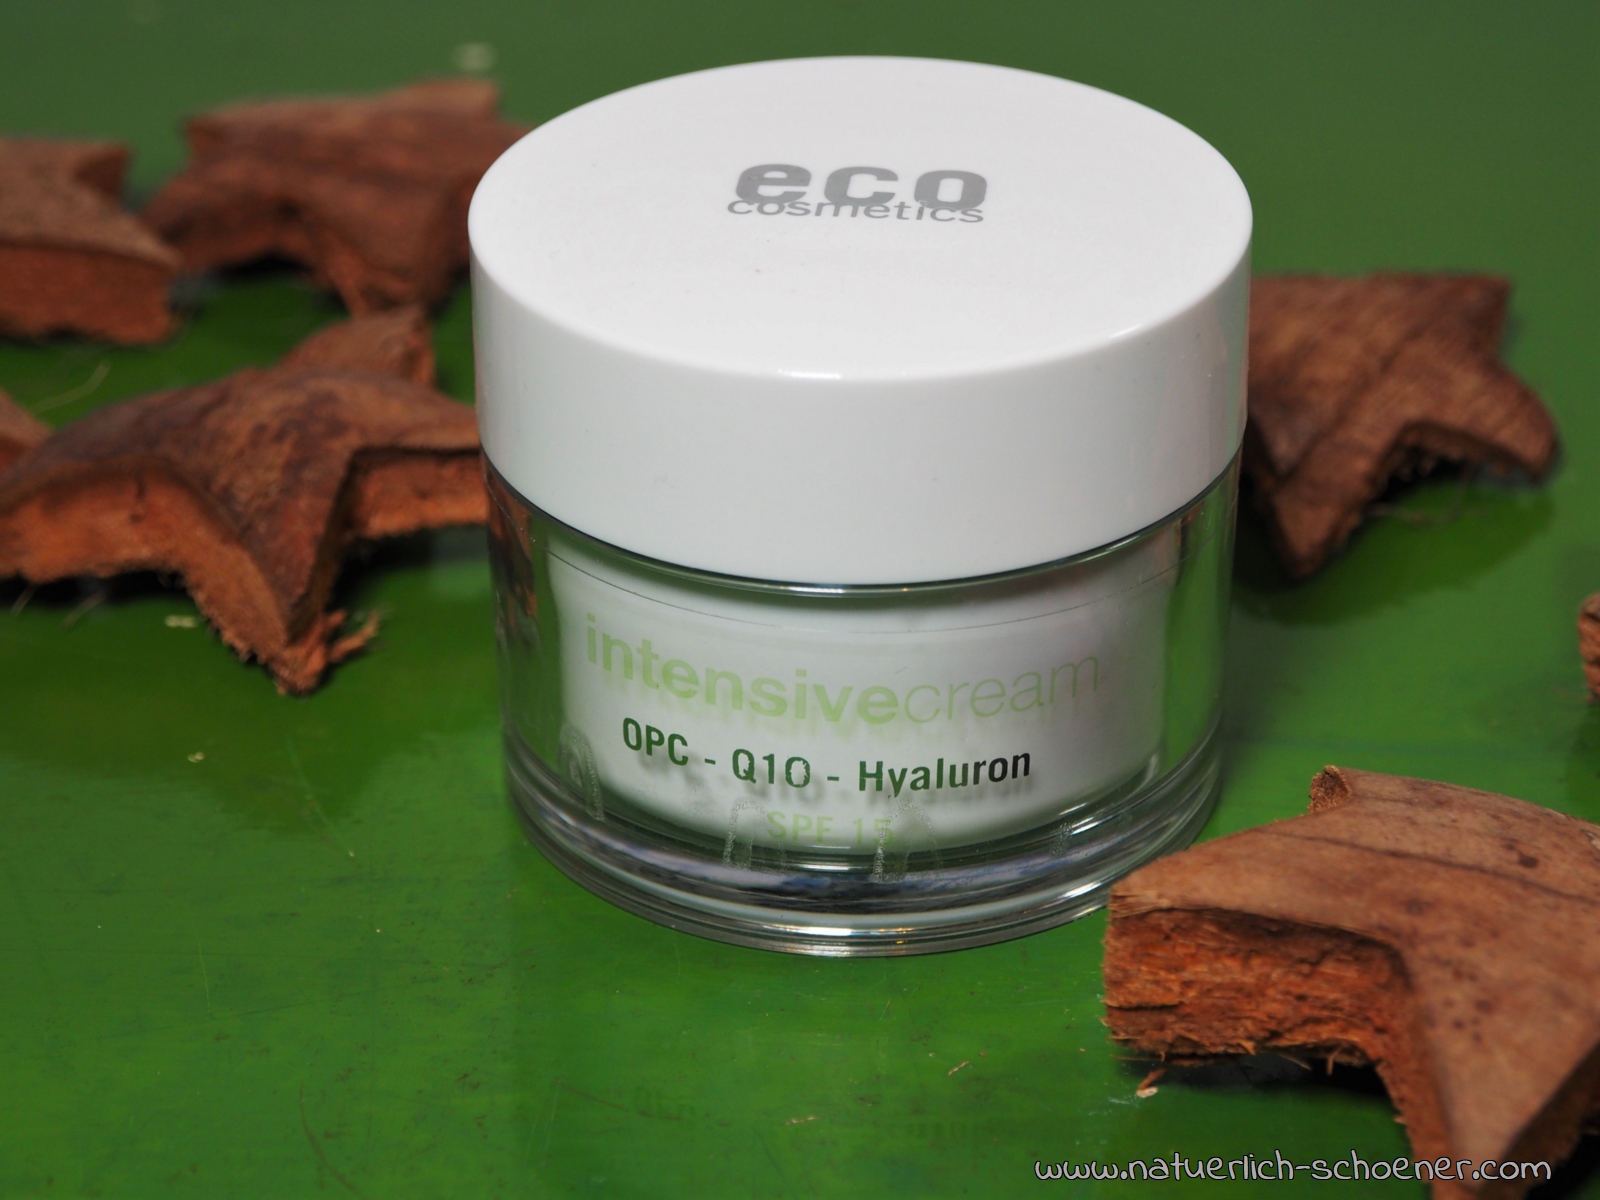 Eco Cosmetics Intensiv Creme